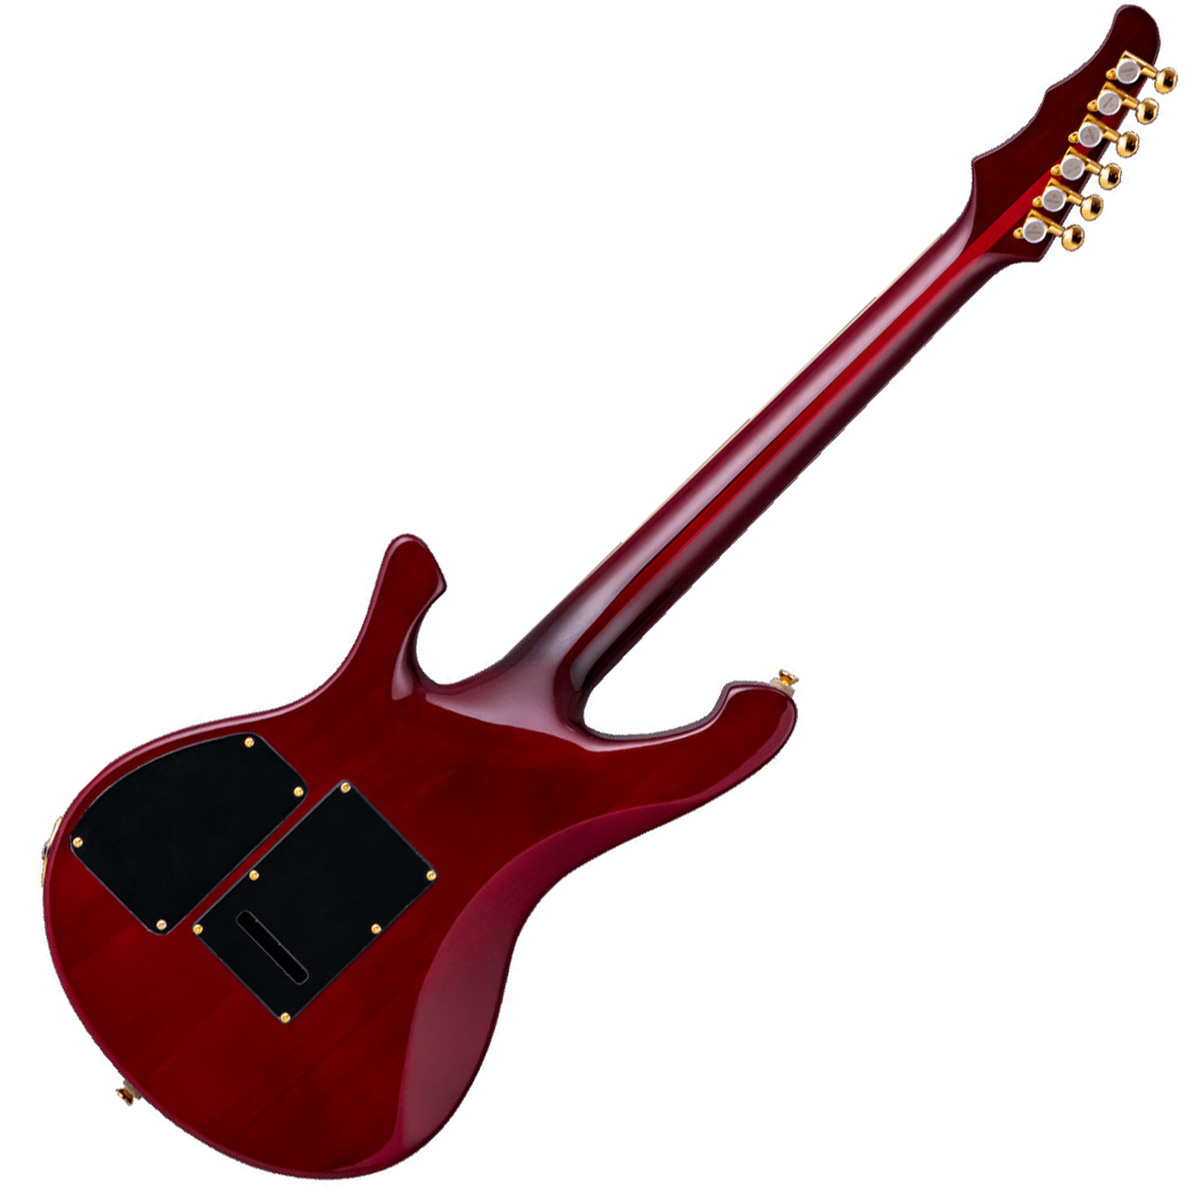 MD-MM Produce MD-Premier MD-G1/RSR エレキギター 国産 セミアコ 